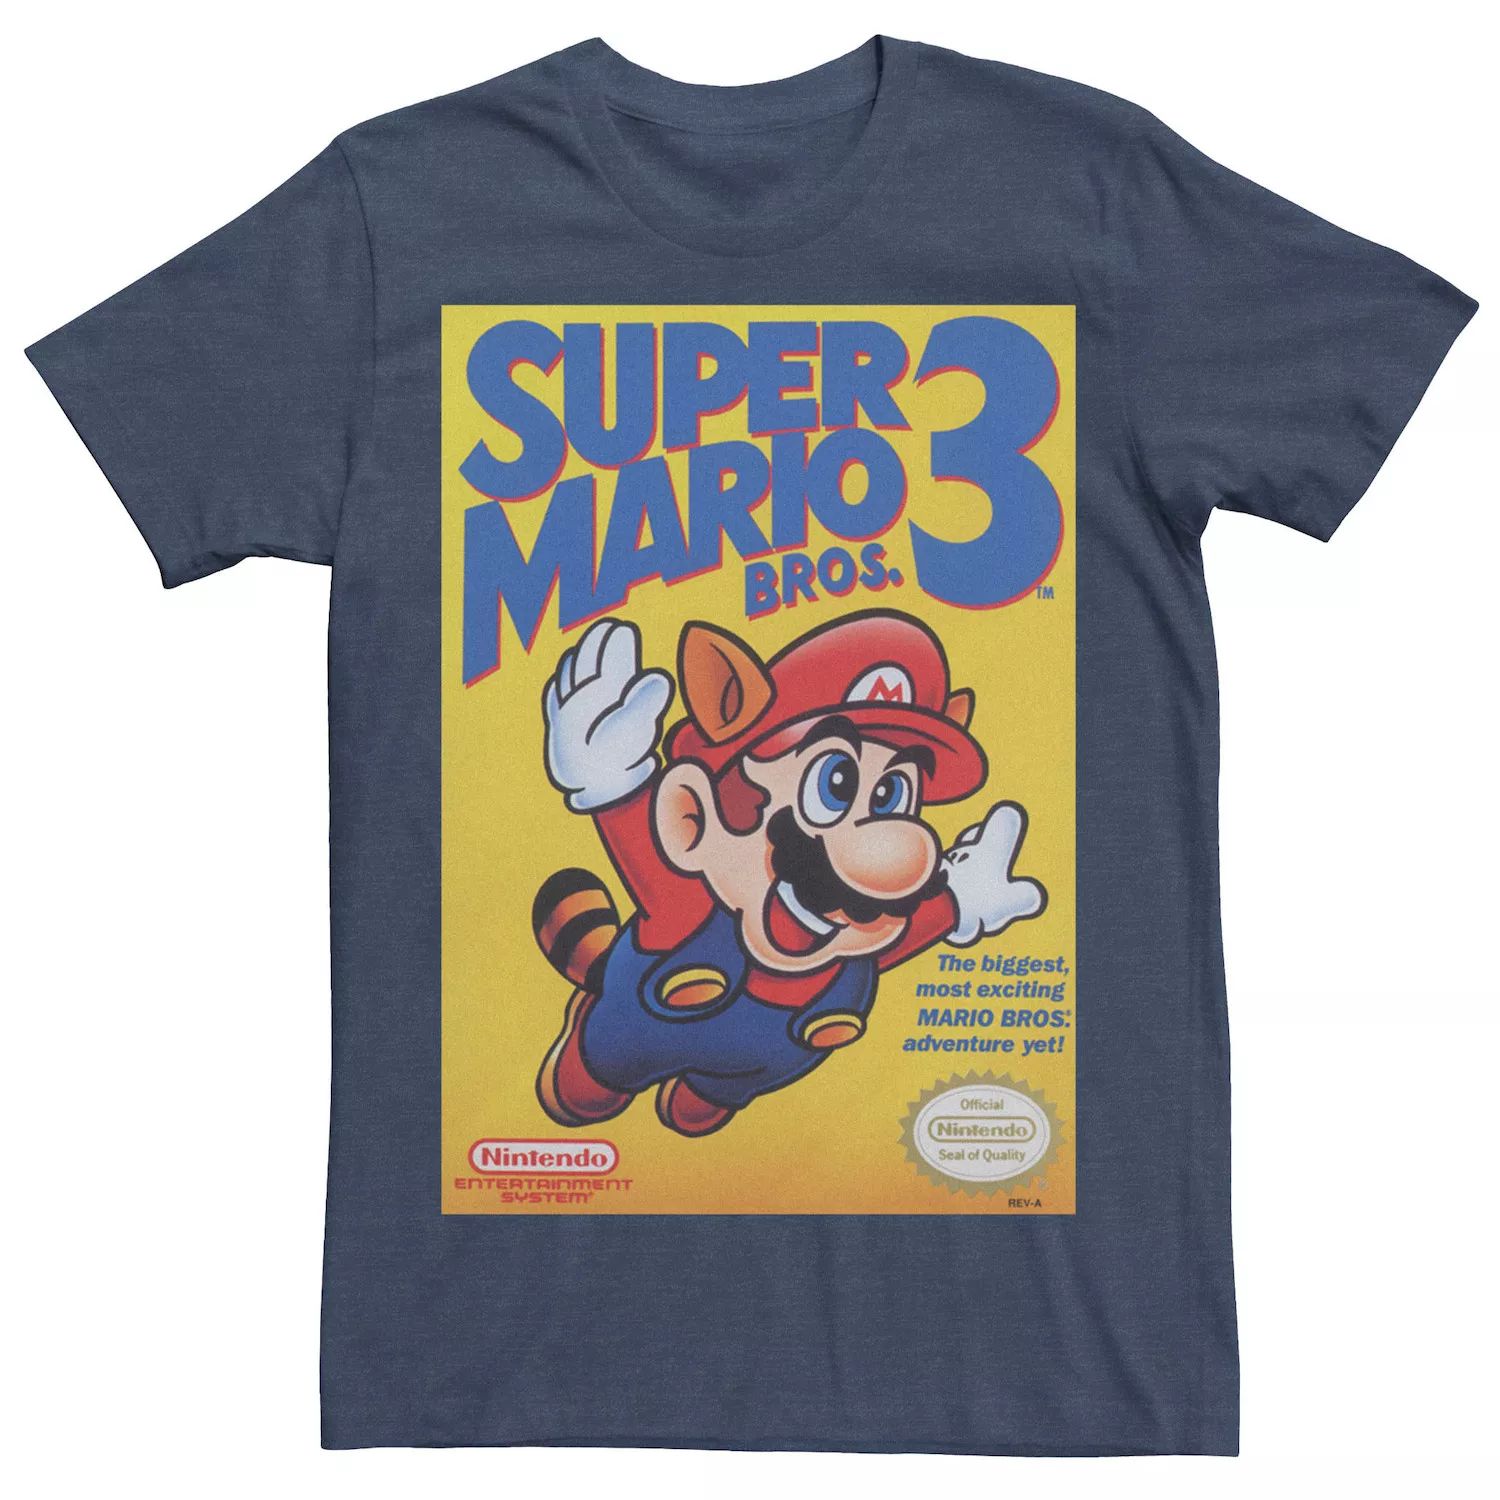 Мужская футболка с плакатом Super Mario Bros 3 Flying Raccoon Mario Licensed Character